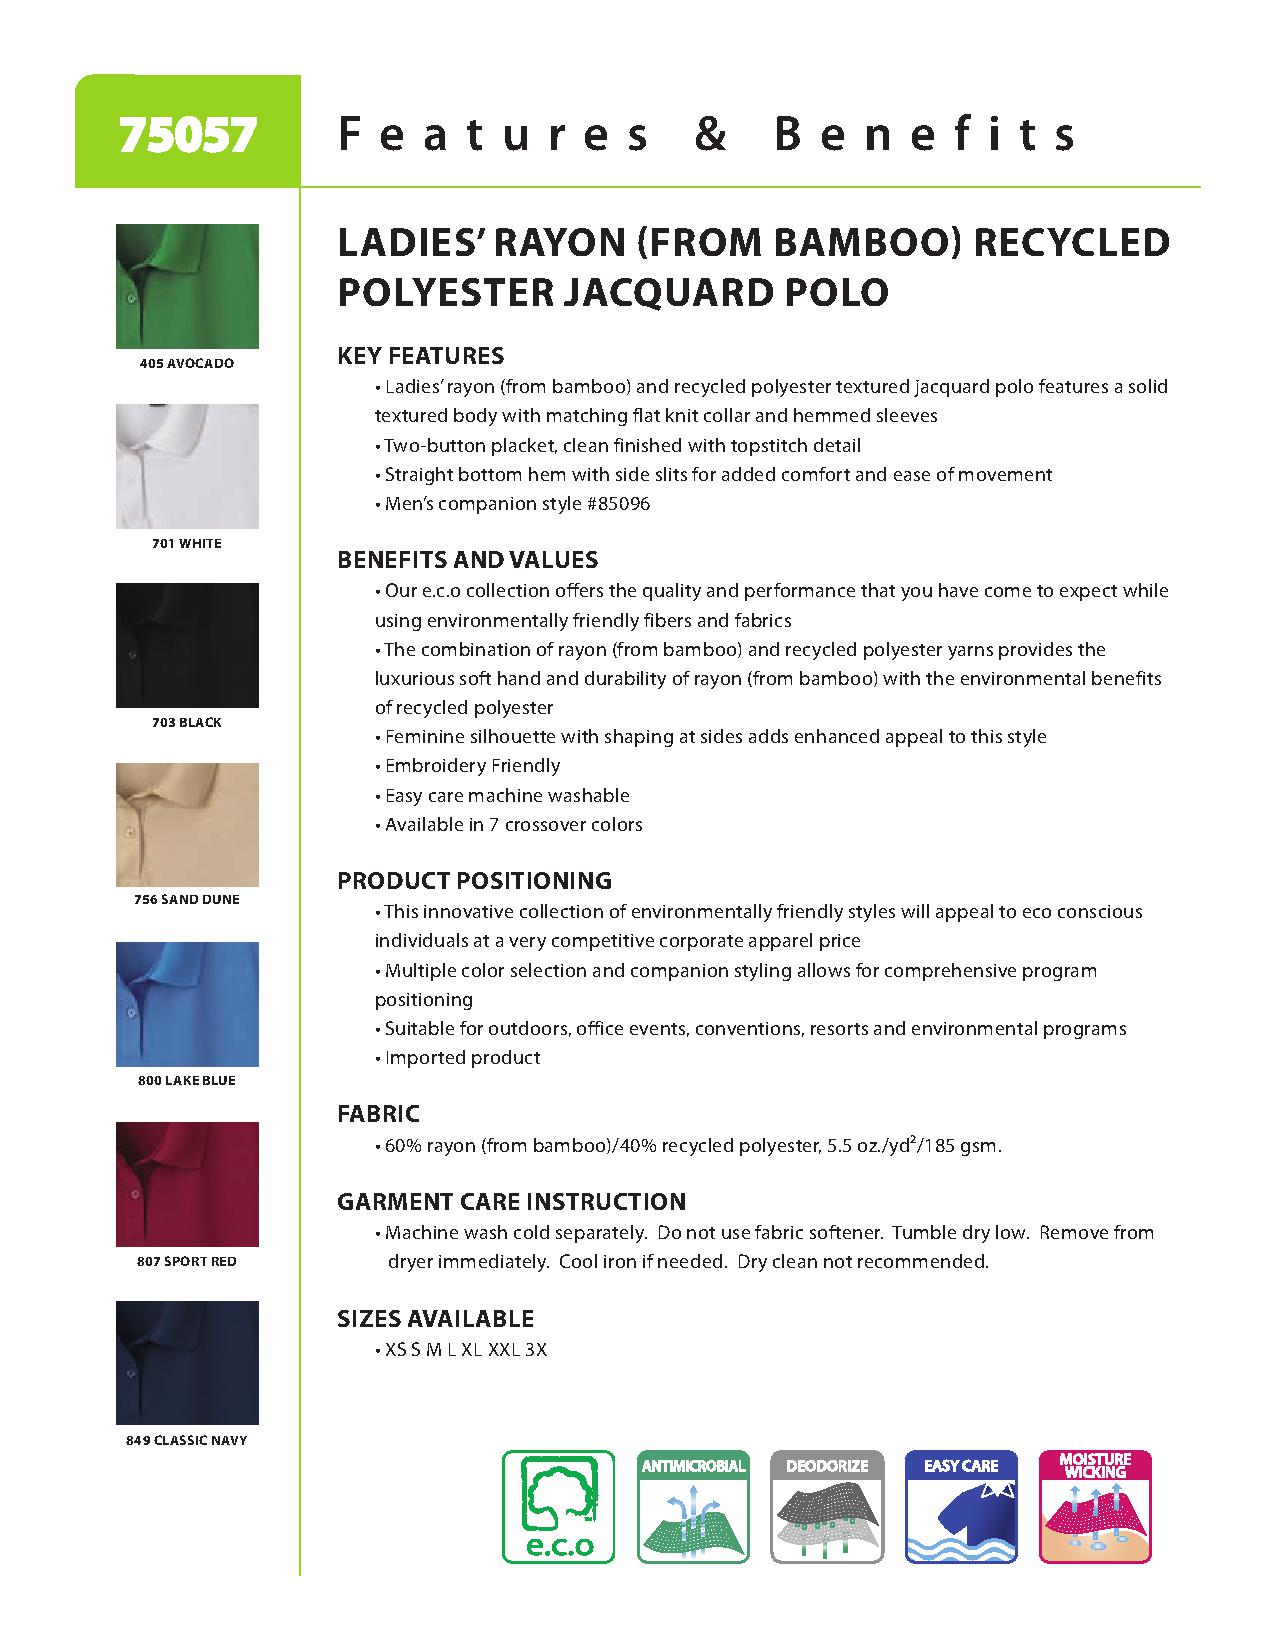 Ash City e.c.o Knits 75057 - Ladies' Rayon Recycled polyester Jacquard Polo